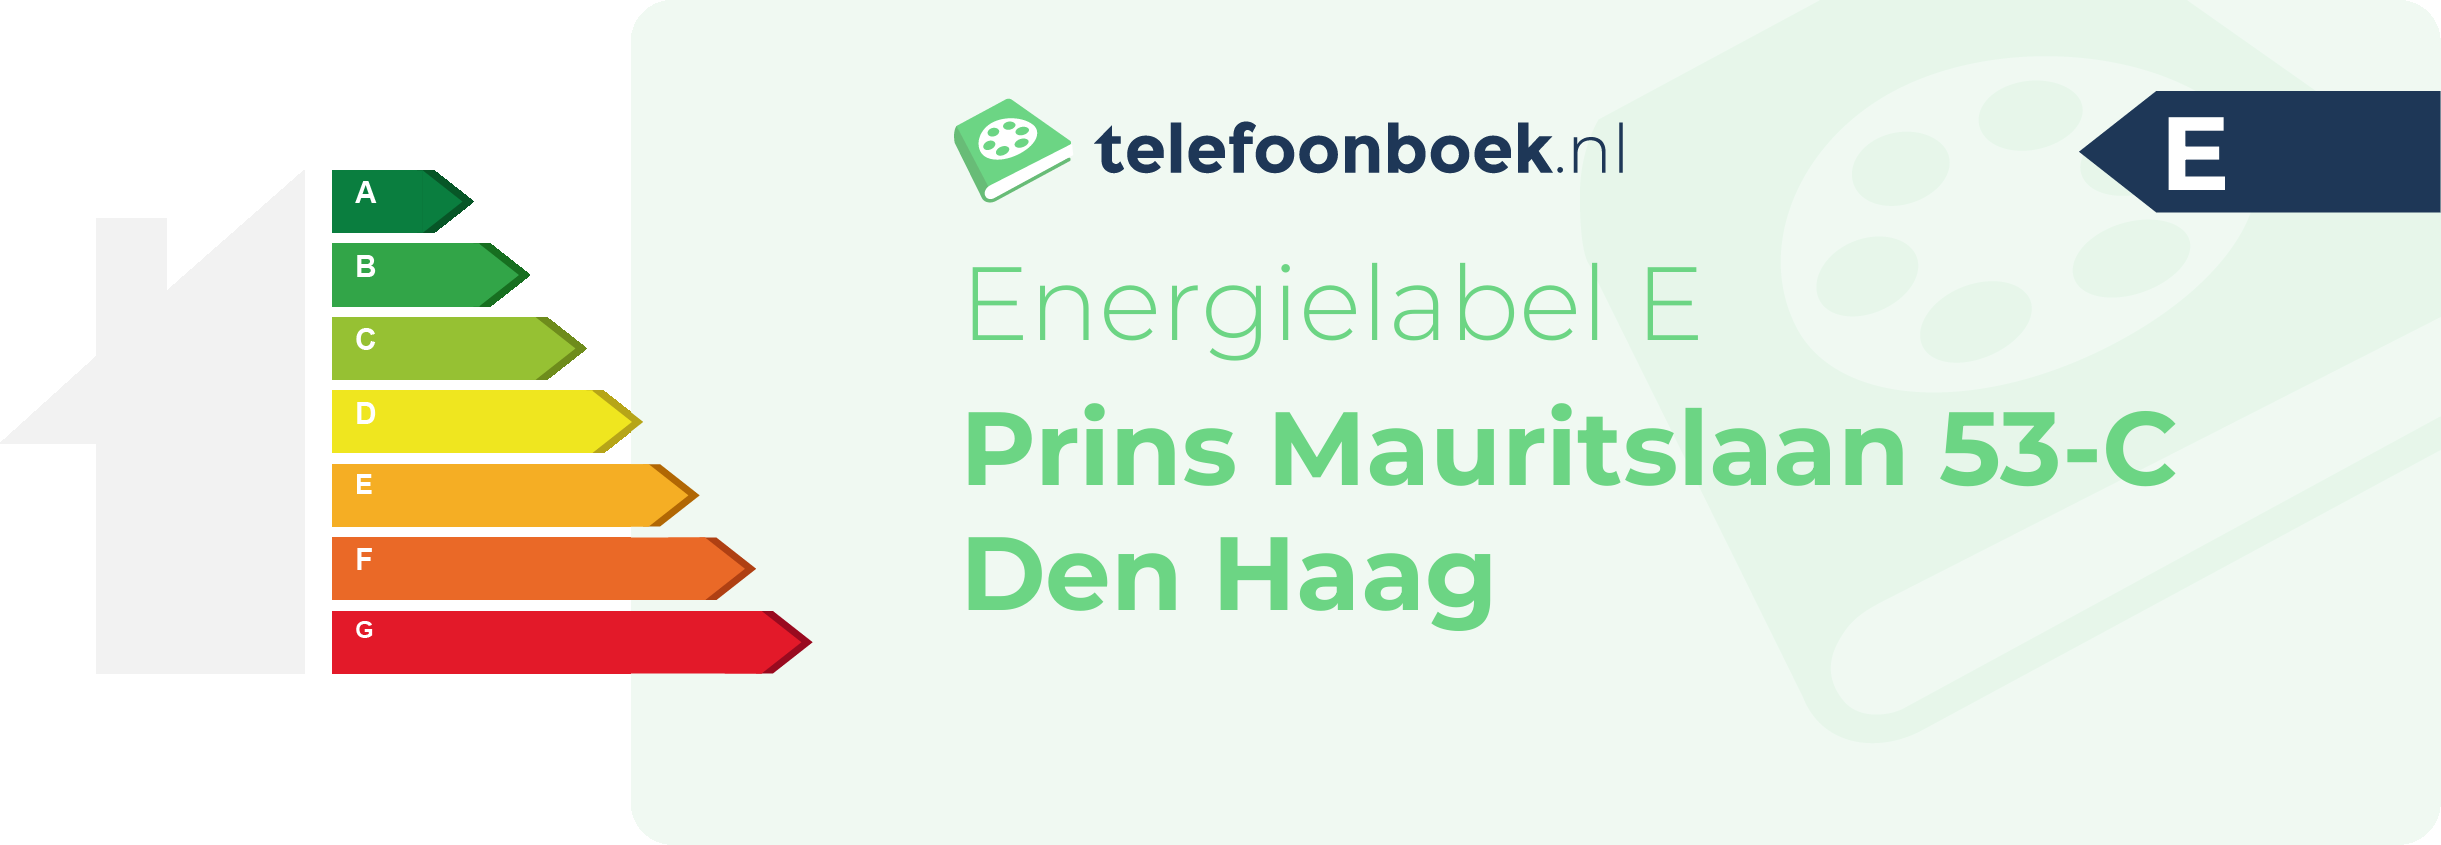 Energielabel Prins Mauritslaan 53-C Den Haag